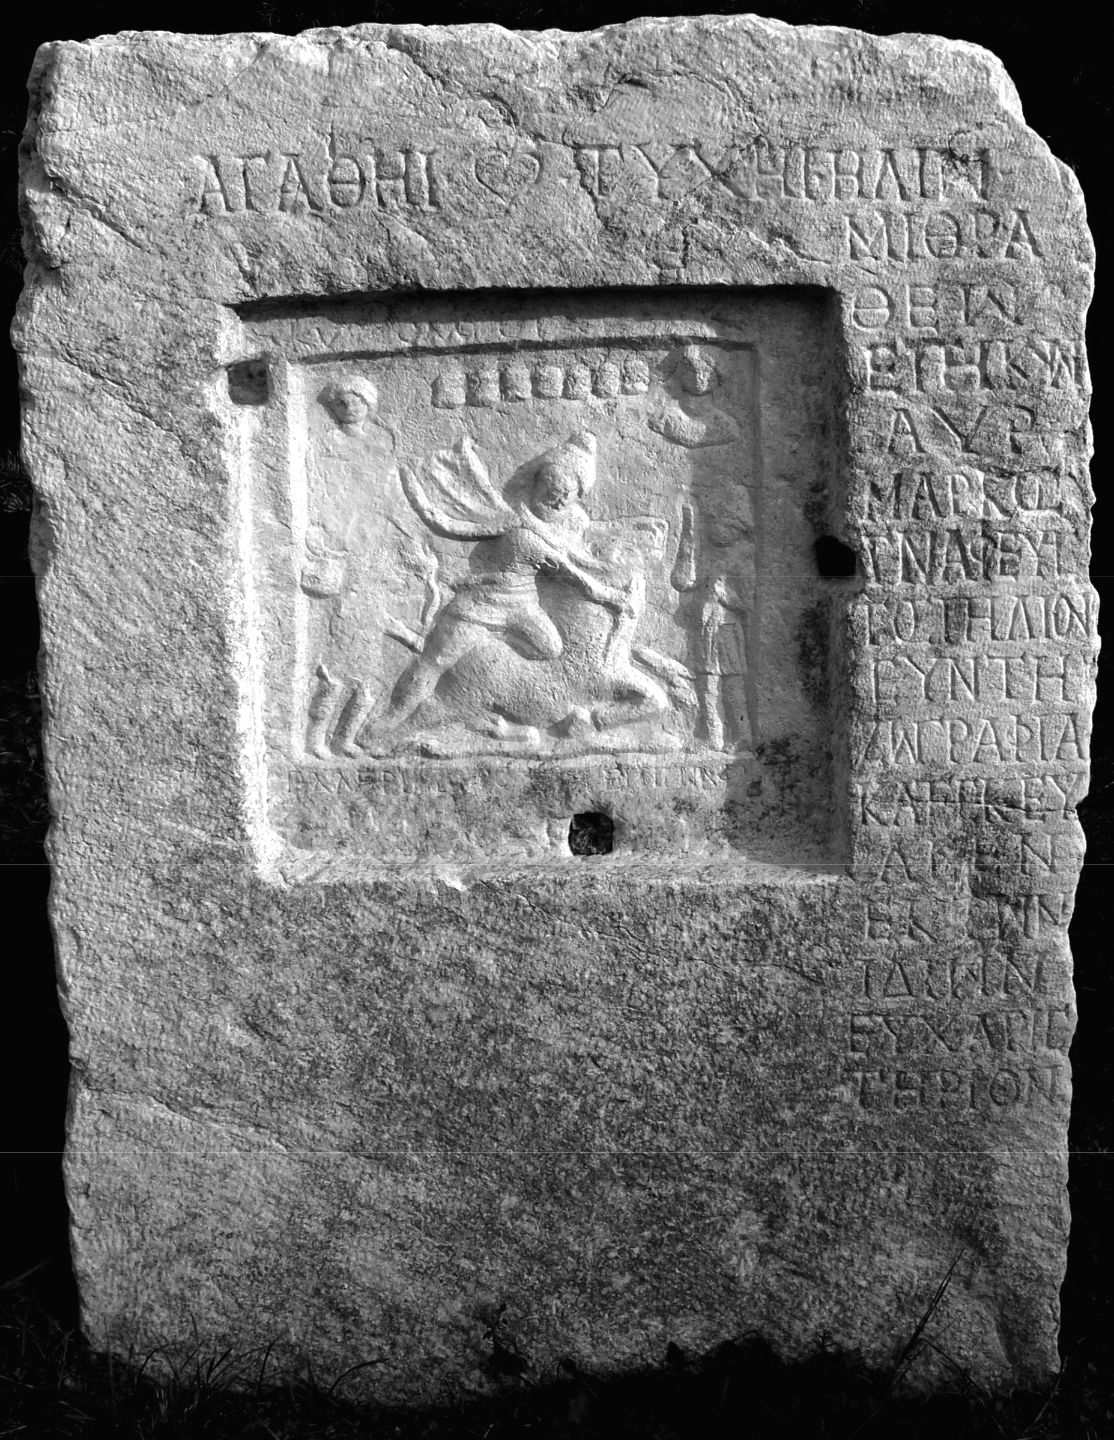 Mithras stele of Nicopolis ad Istrum